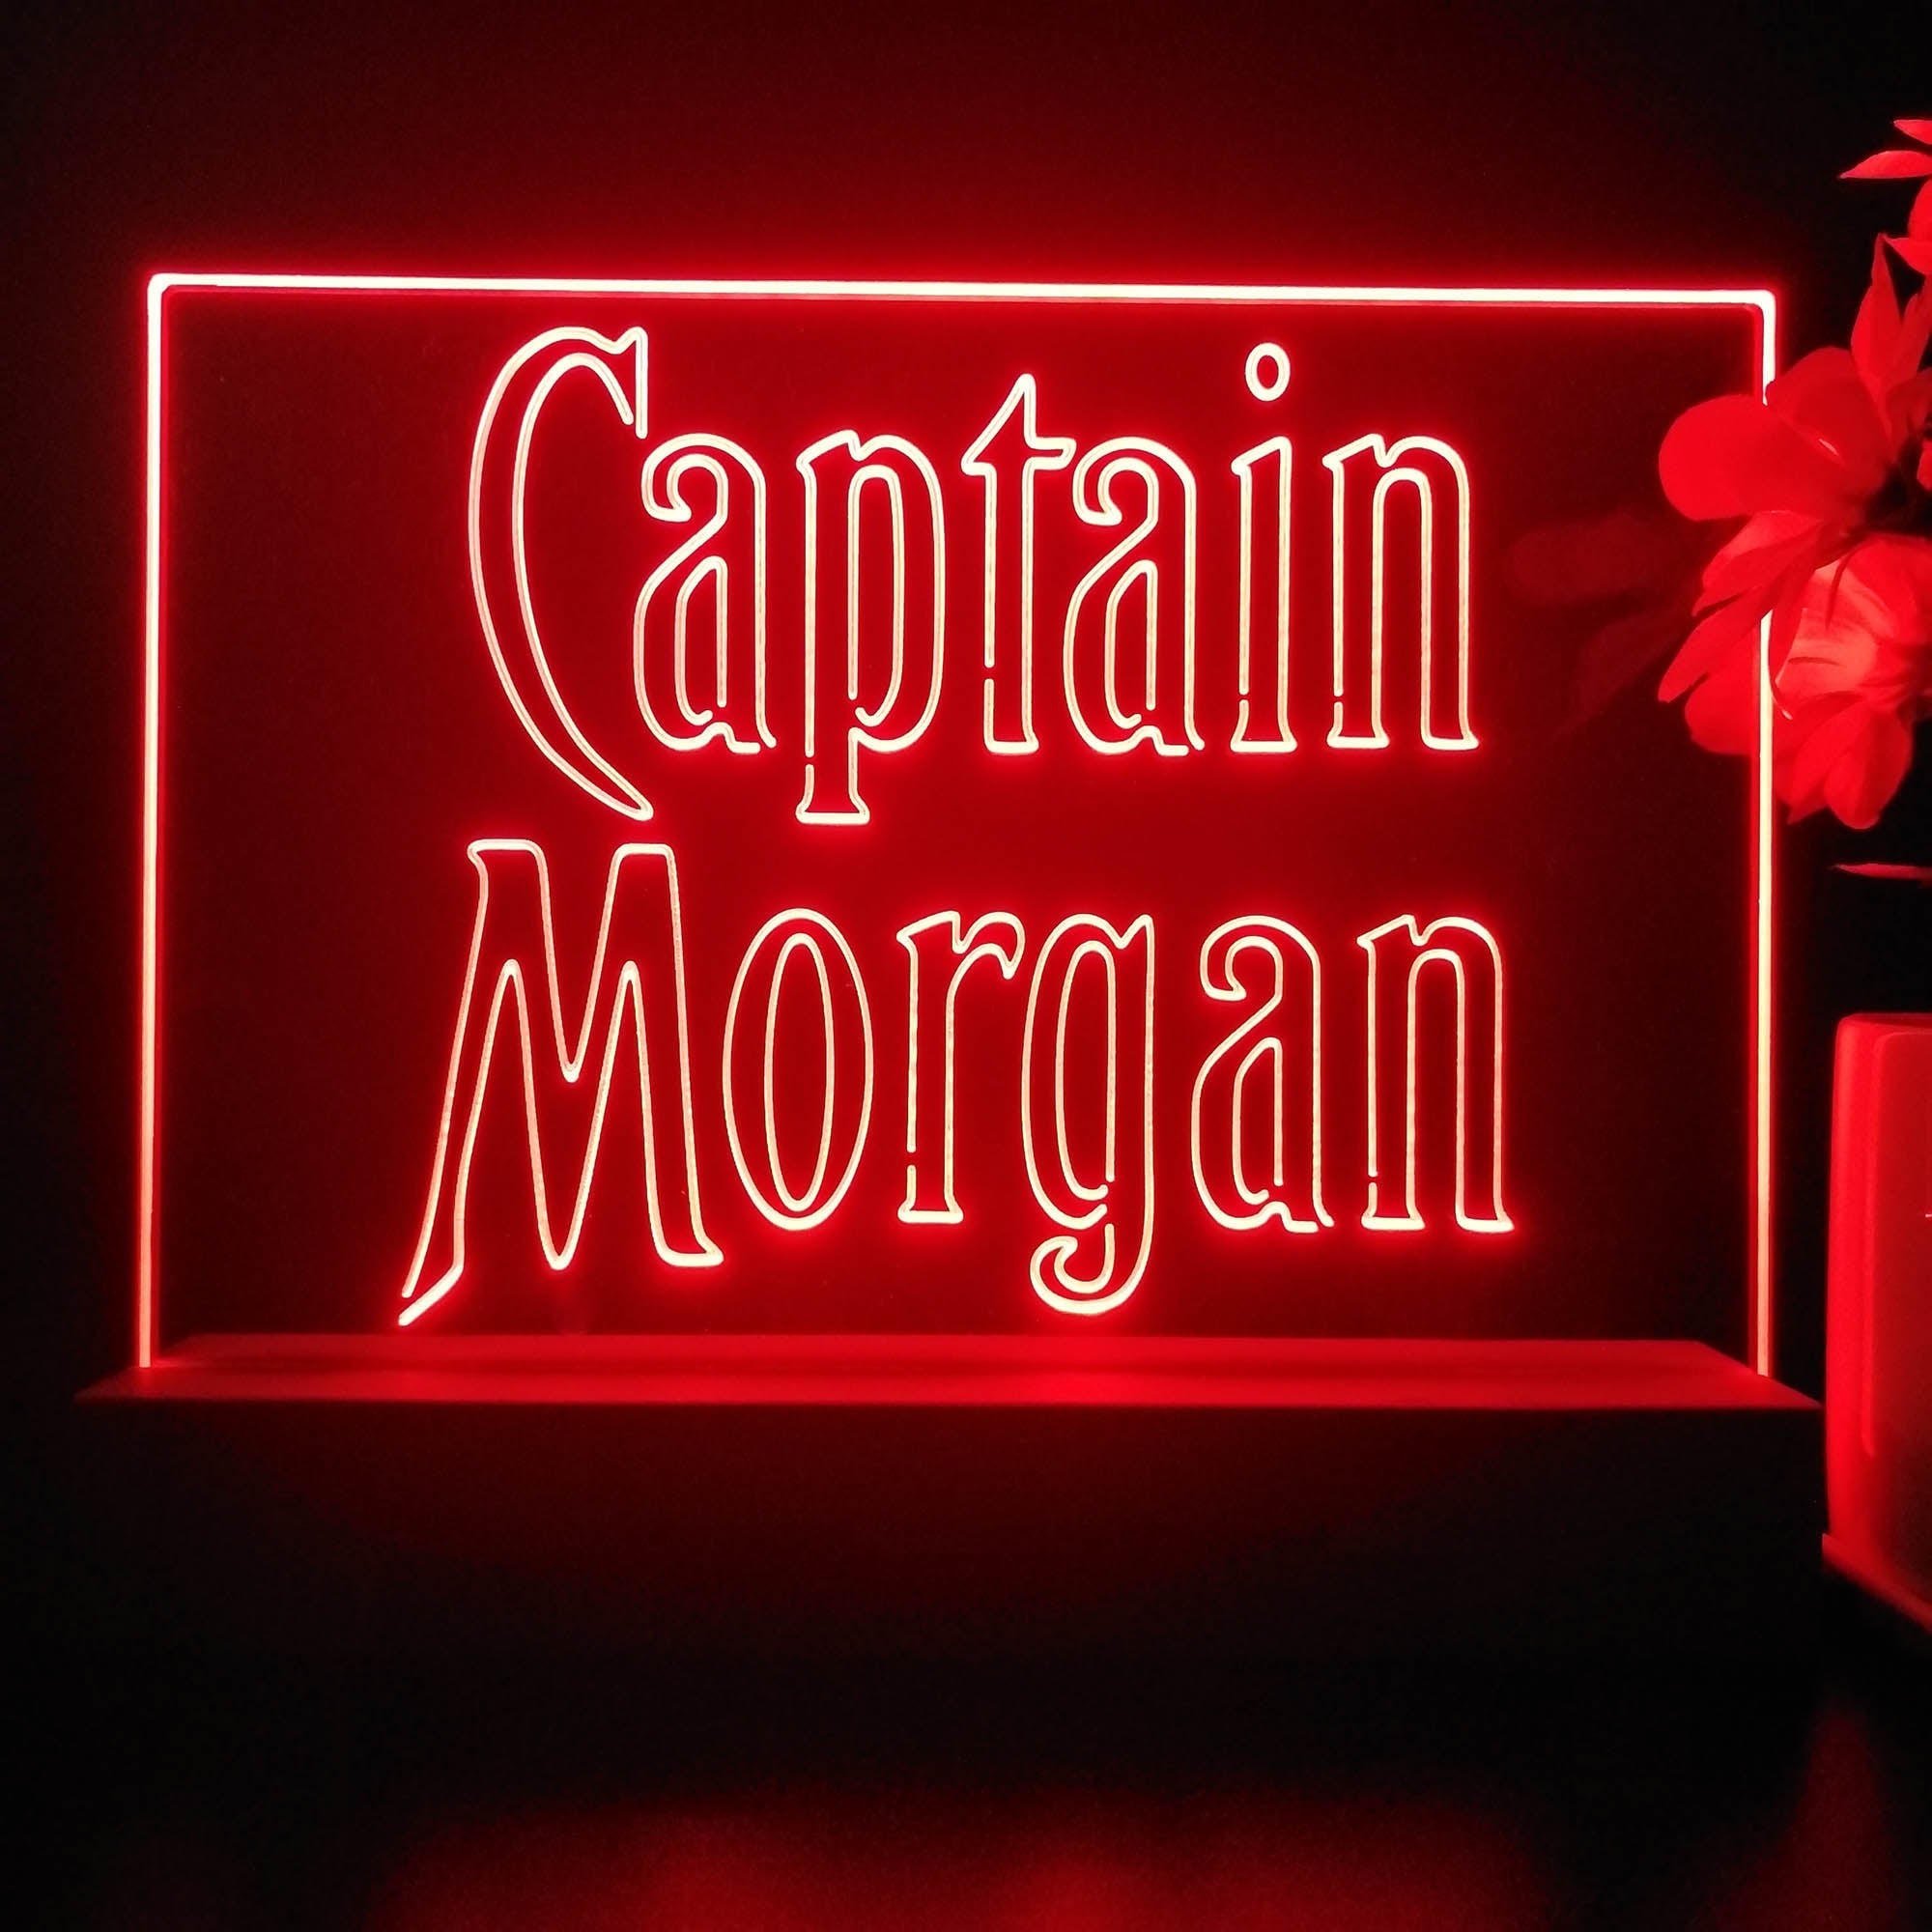 Captain Morgan Neon Sign Pub Bar Lamp